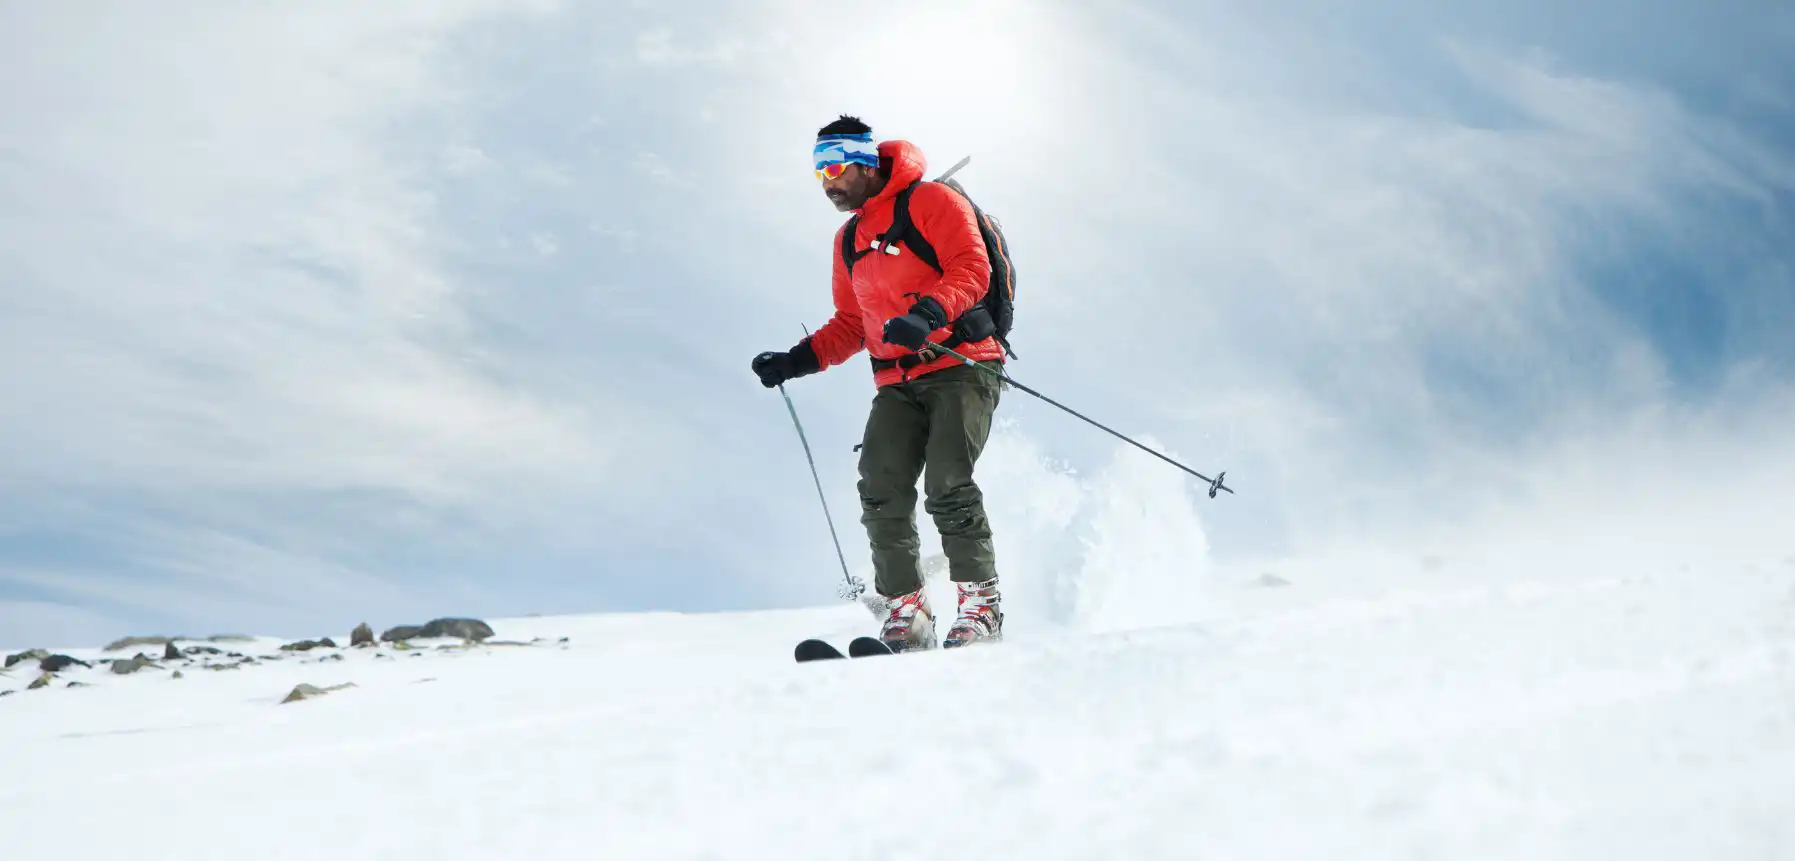 Snowboarding & Skiing on Snowy Meadows